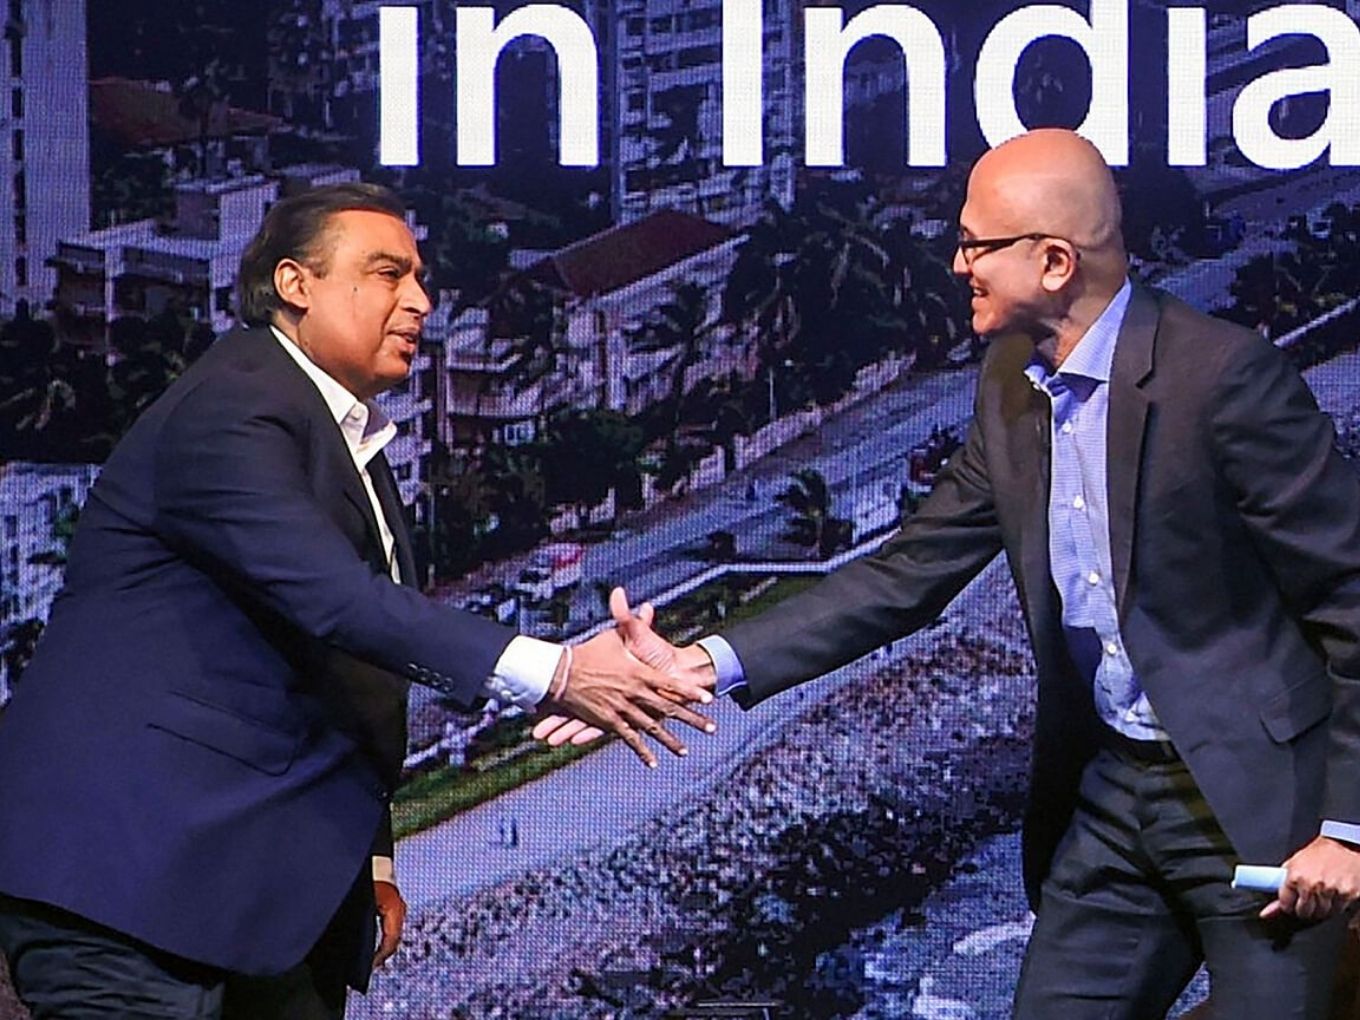 Microsoft, Reliance Cloud Partnership To Transform India, Says Ambani